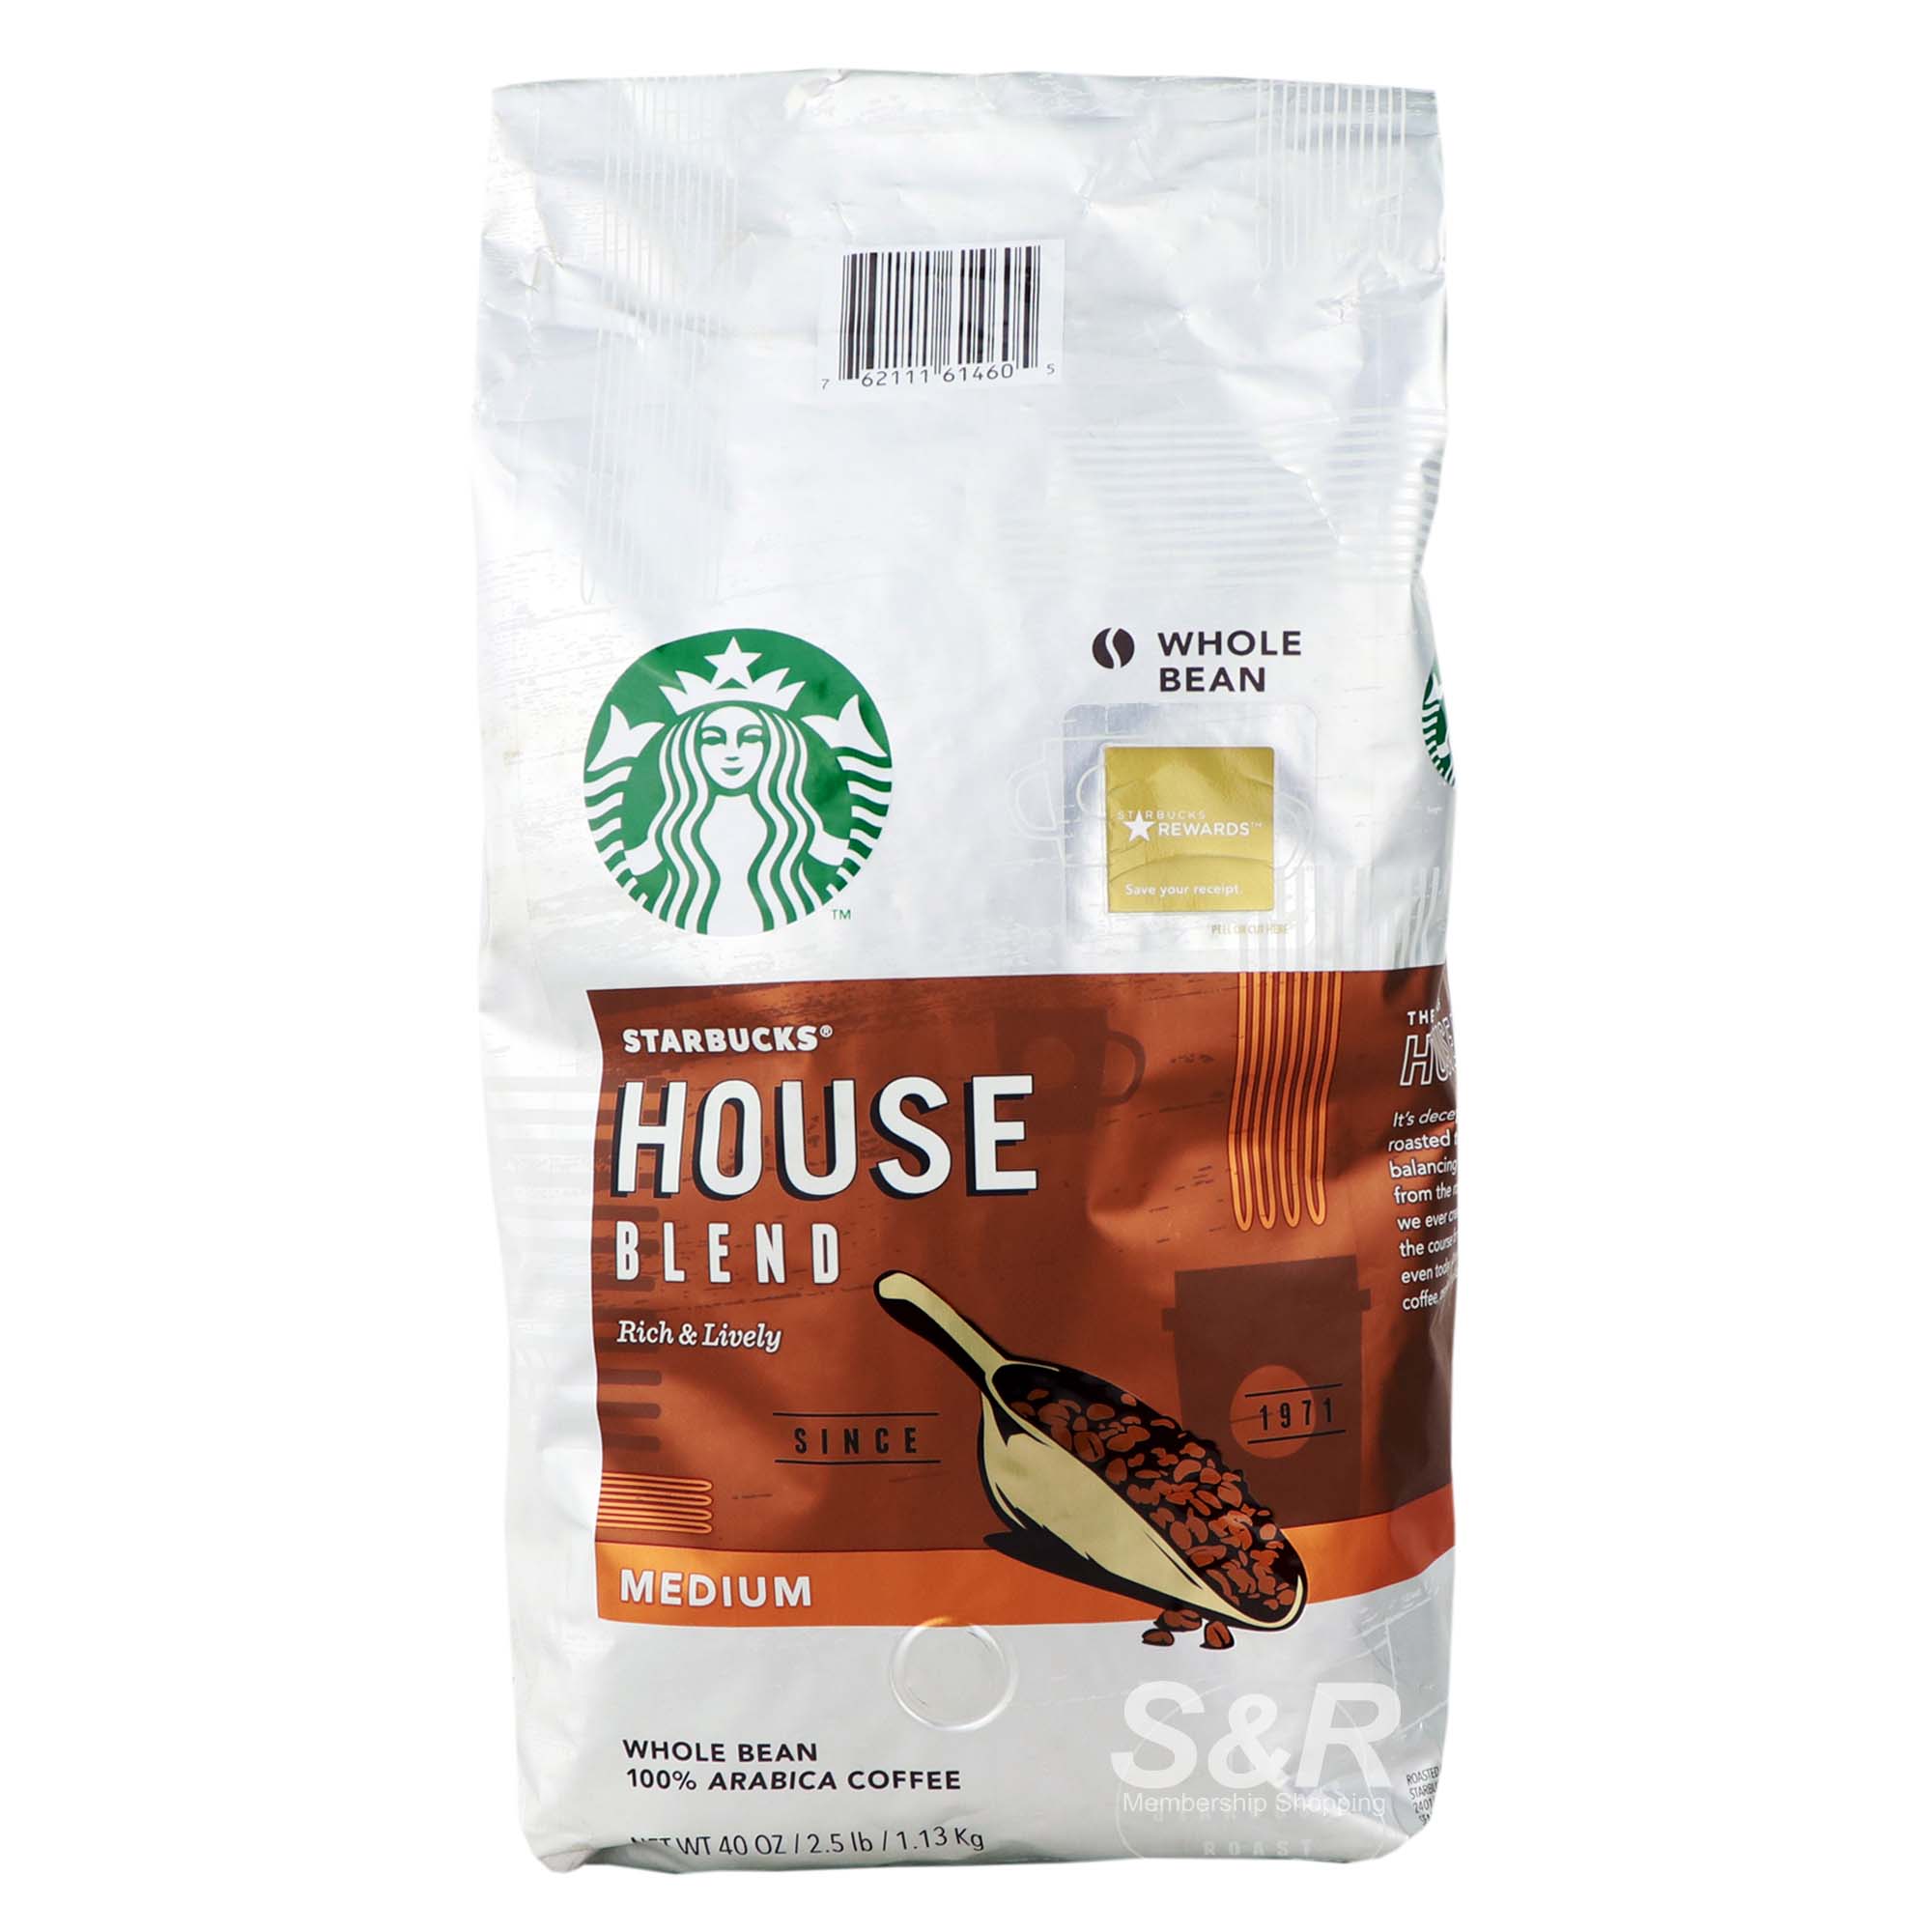 Starbucks House Blend Medium Whole Bean Coffee 1.13kg